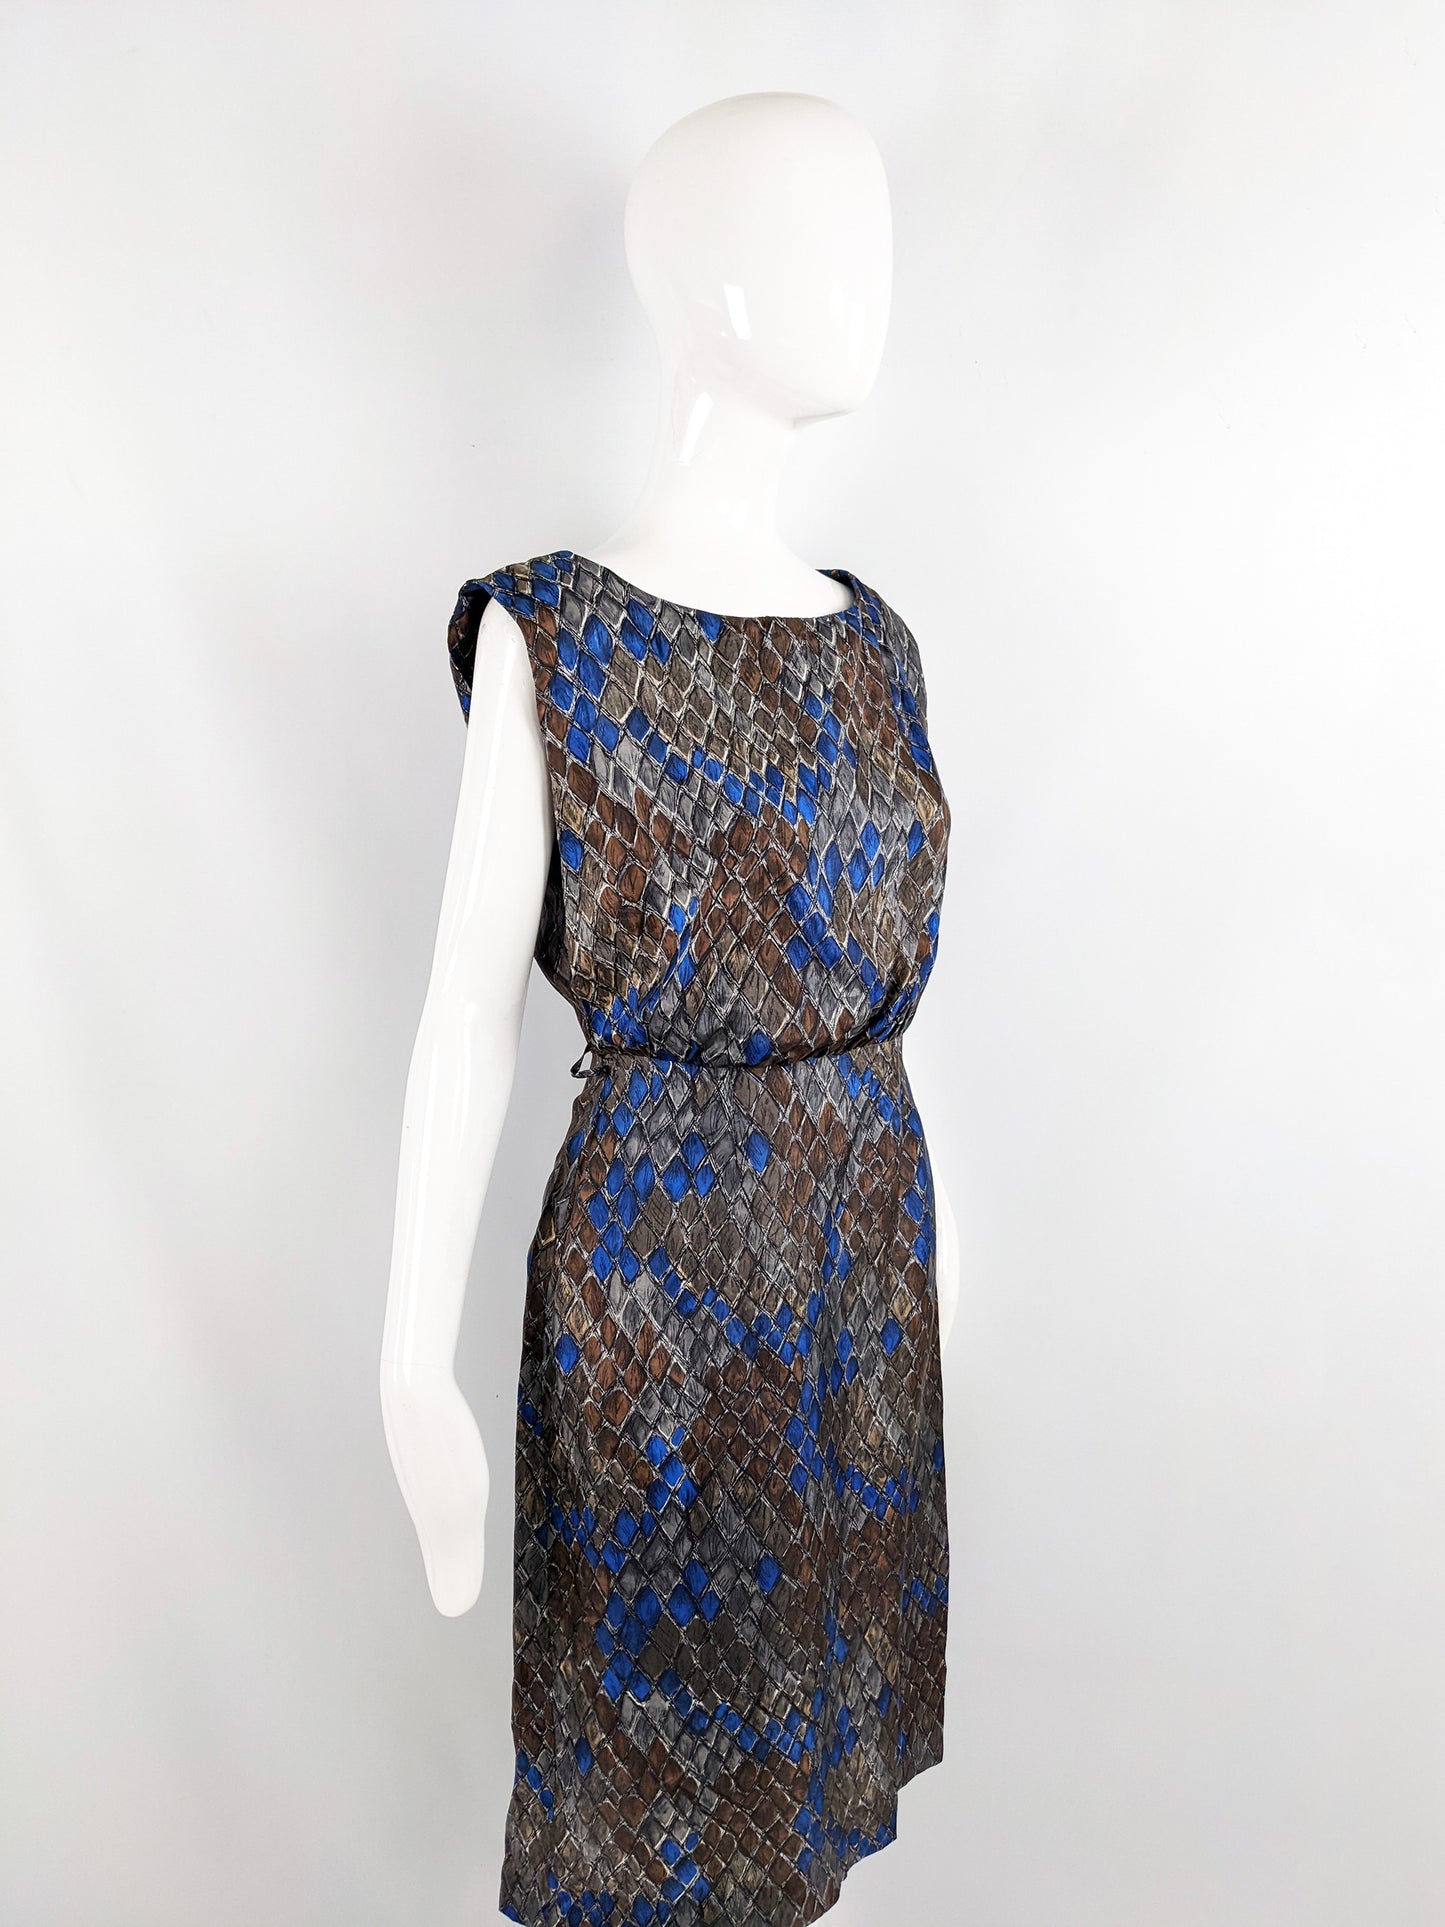 Vintage 50s Silk Party Dress with Blue & Brown Diamond Print, 1950s